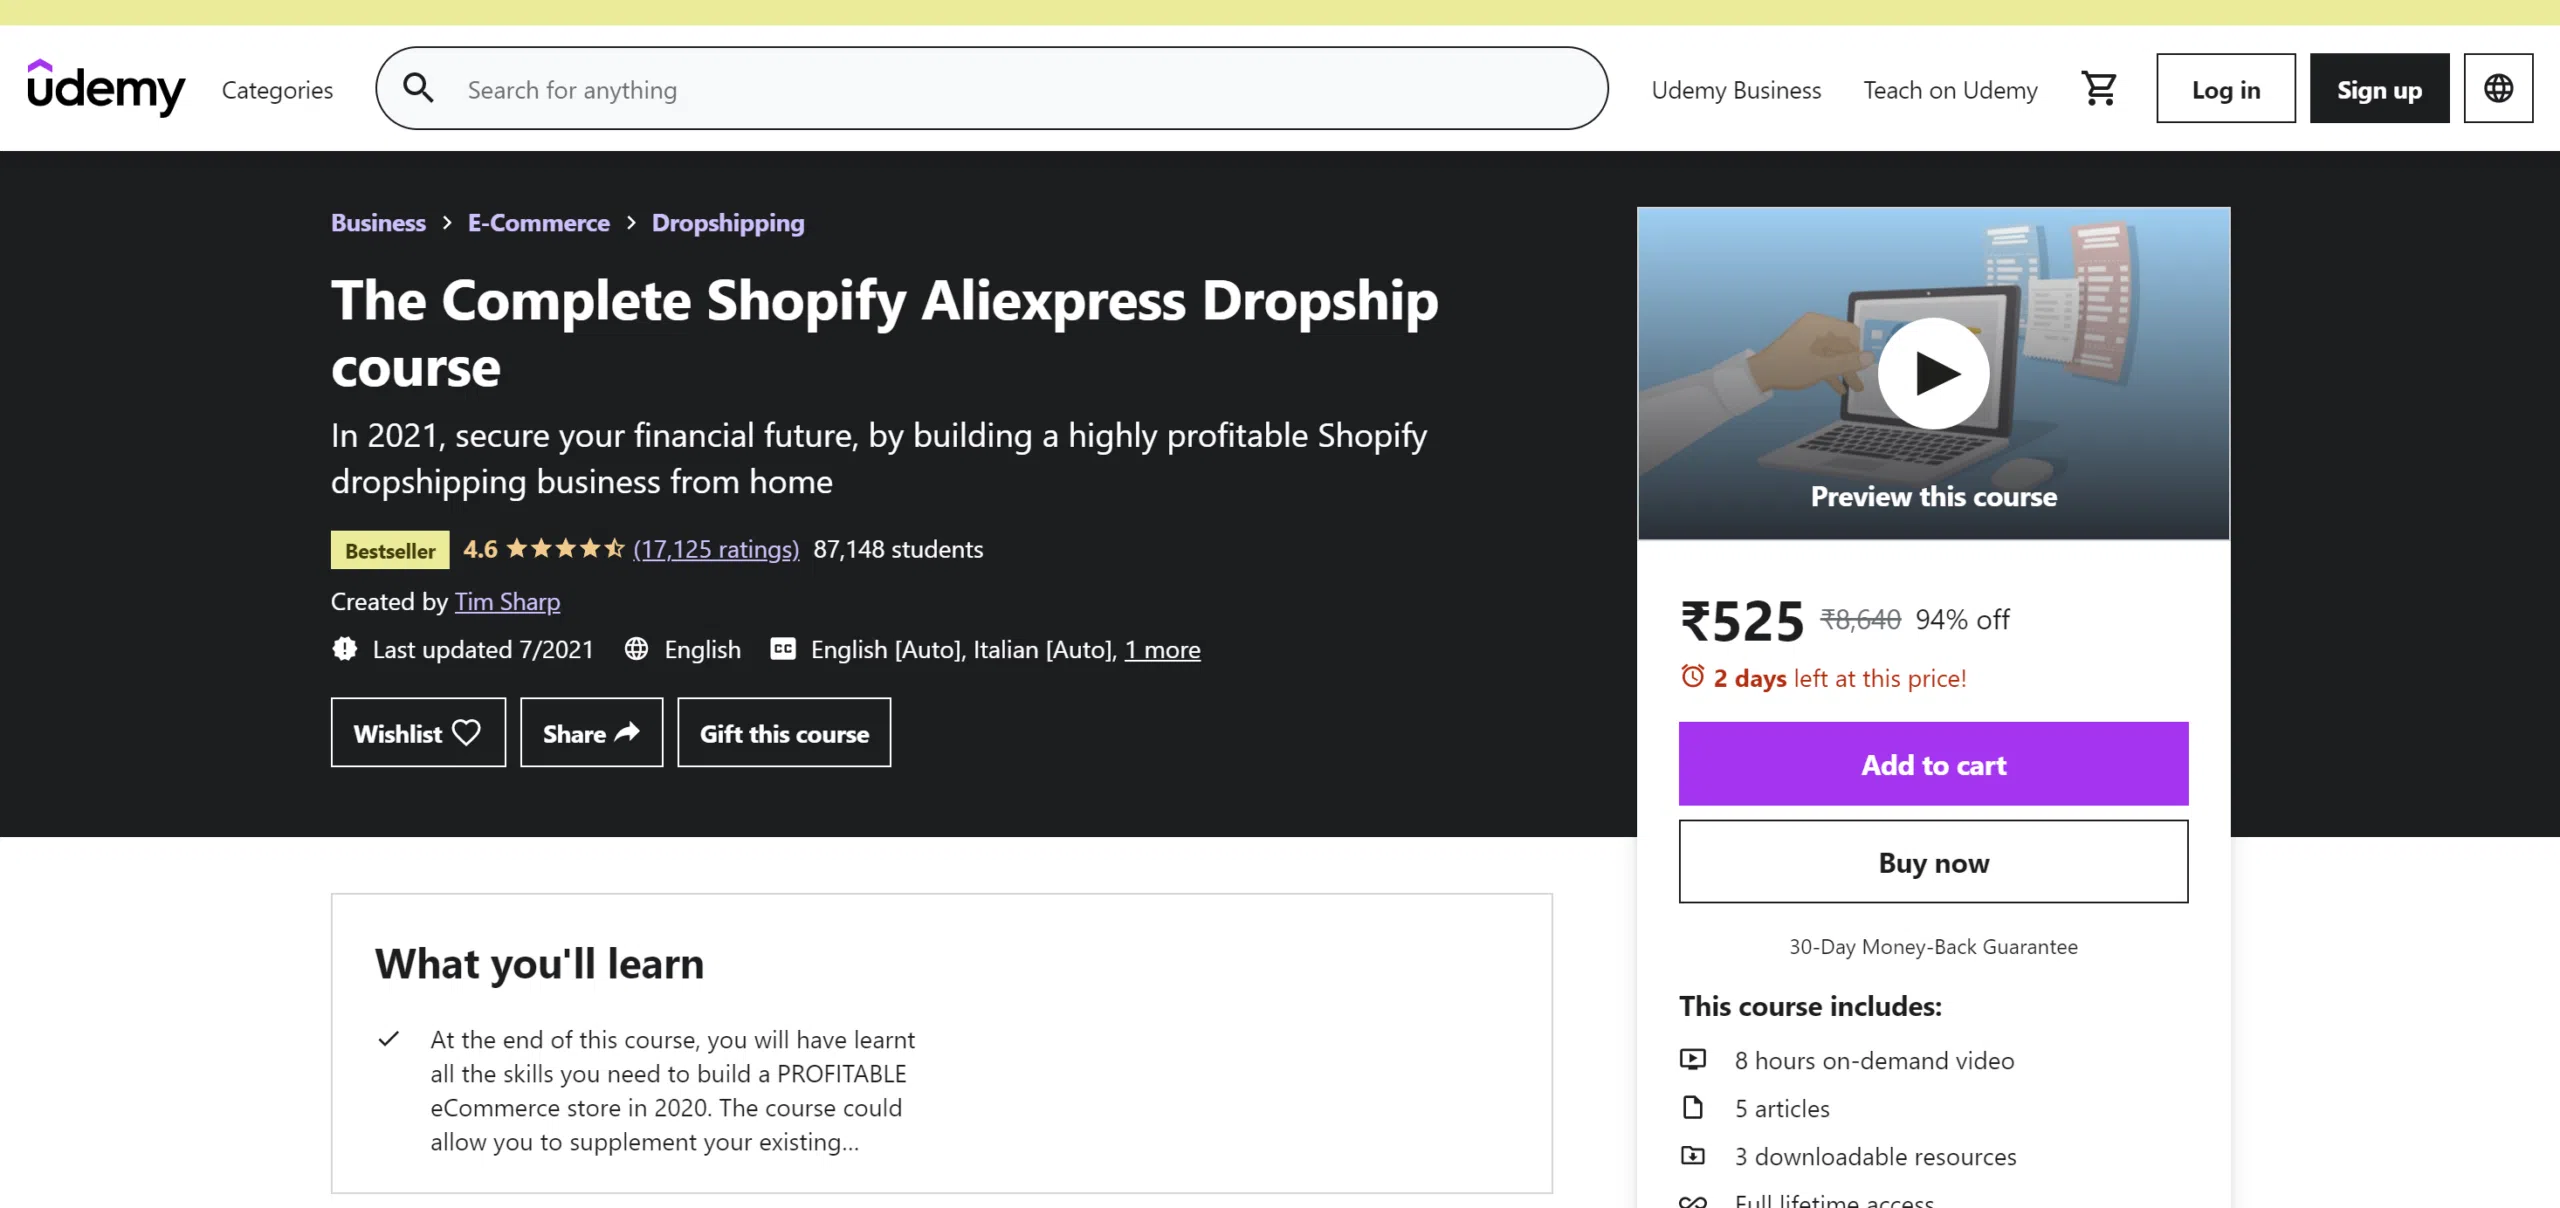 Shopify AliExpress Dropship Course